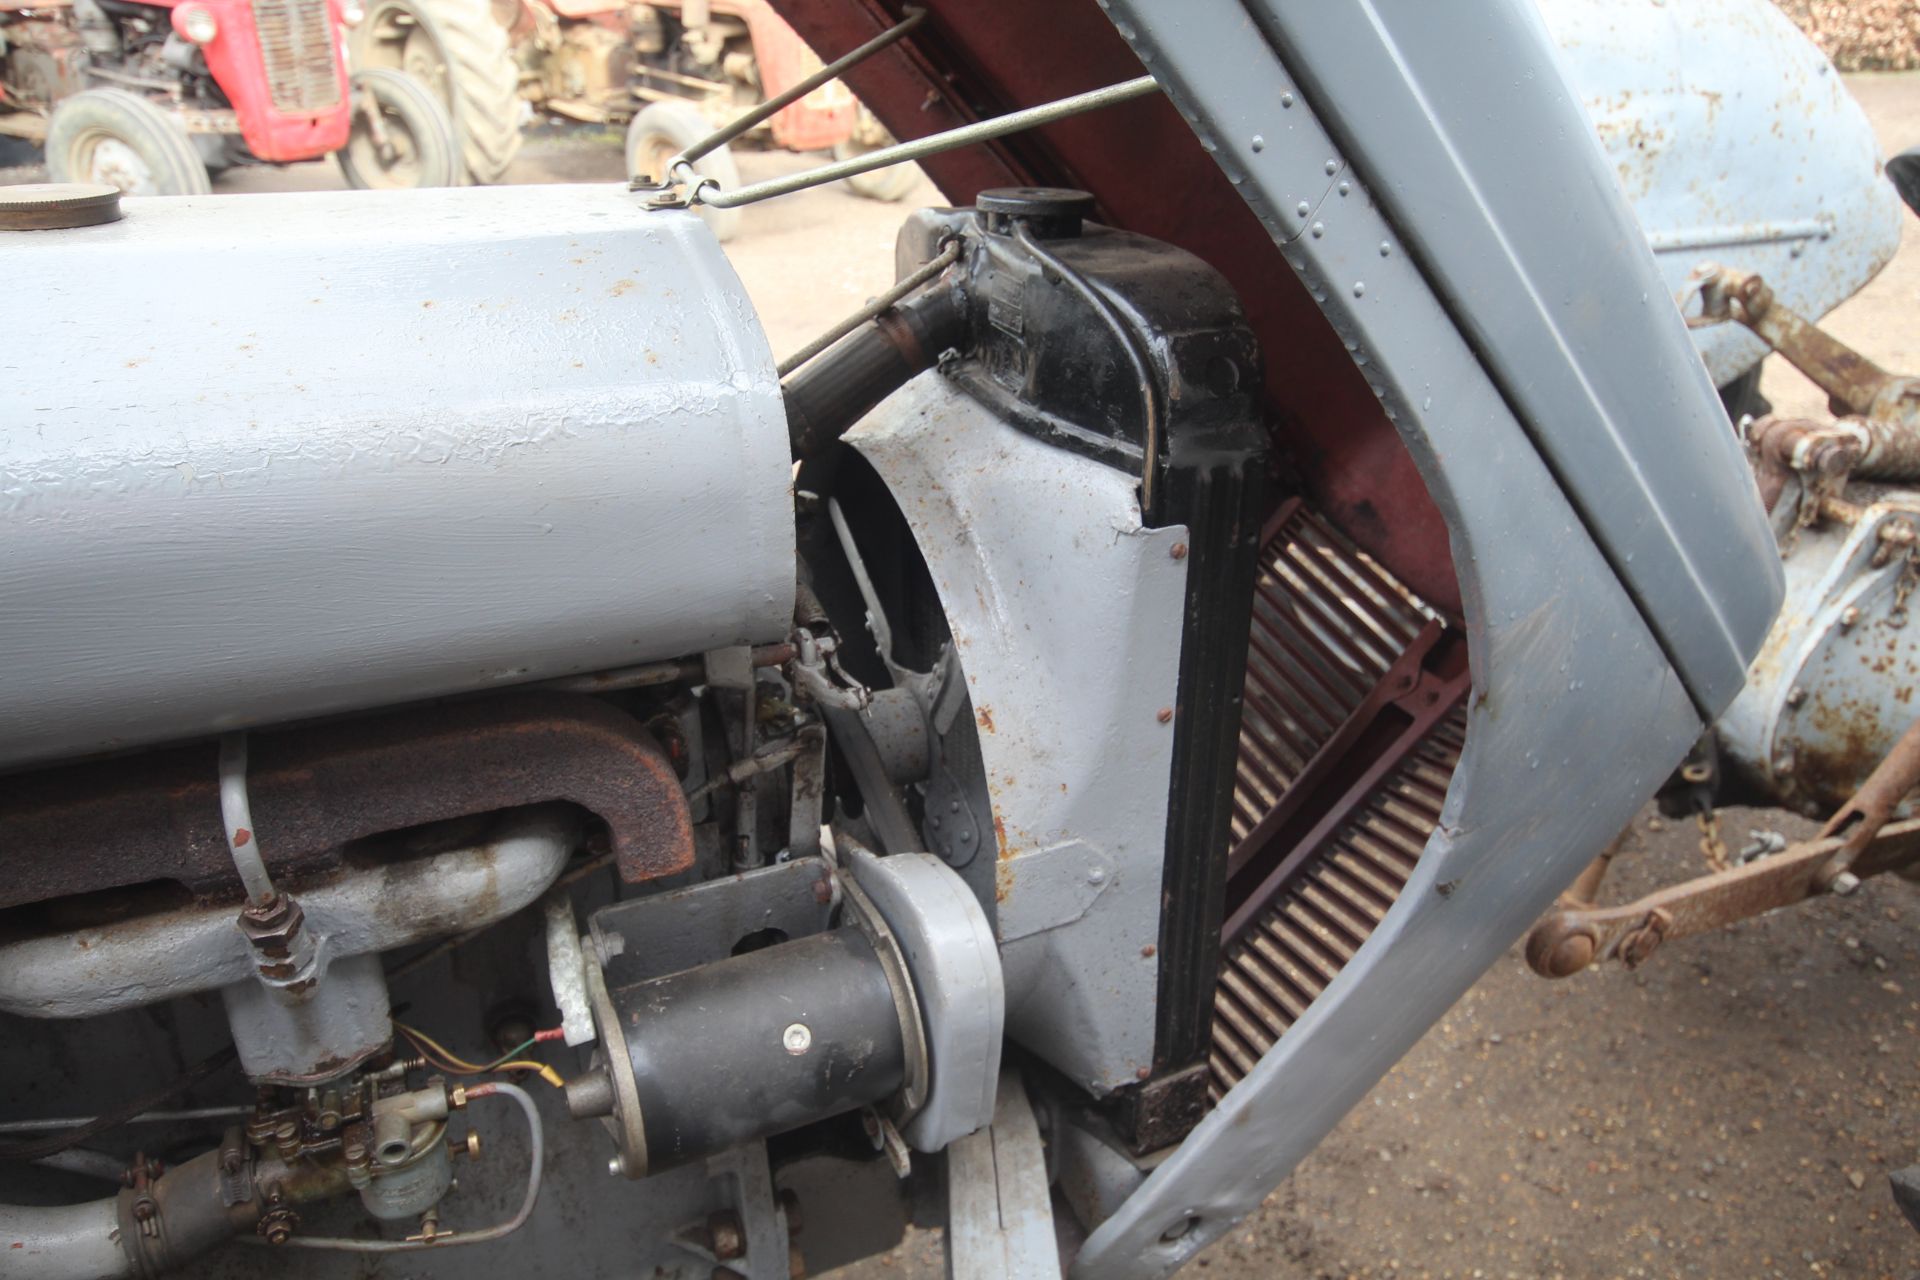 Ferguson TEA 20 Petrol 2WD tractor. Registration 771 XUN. 1948. Serial number 57289. 11.2-28 rear - Image 42 of 44